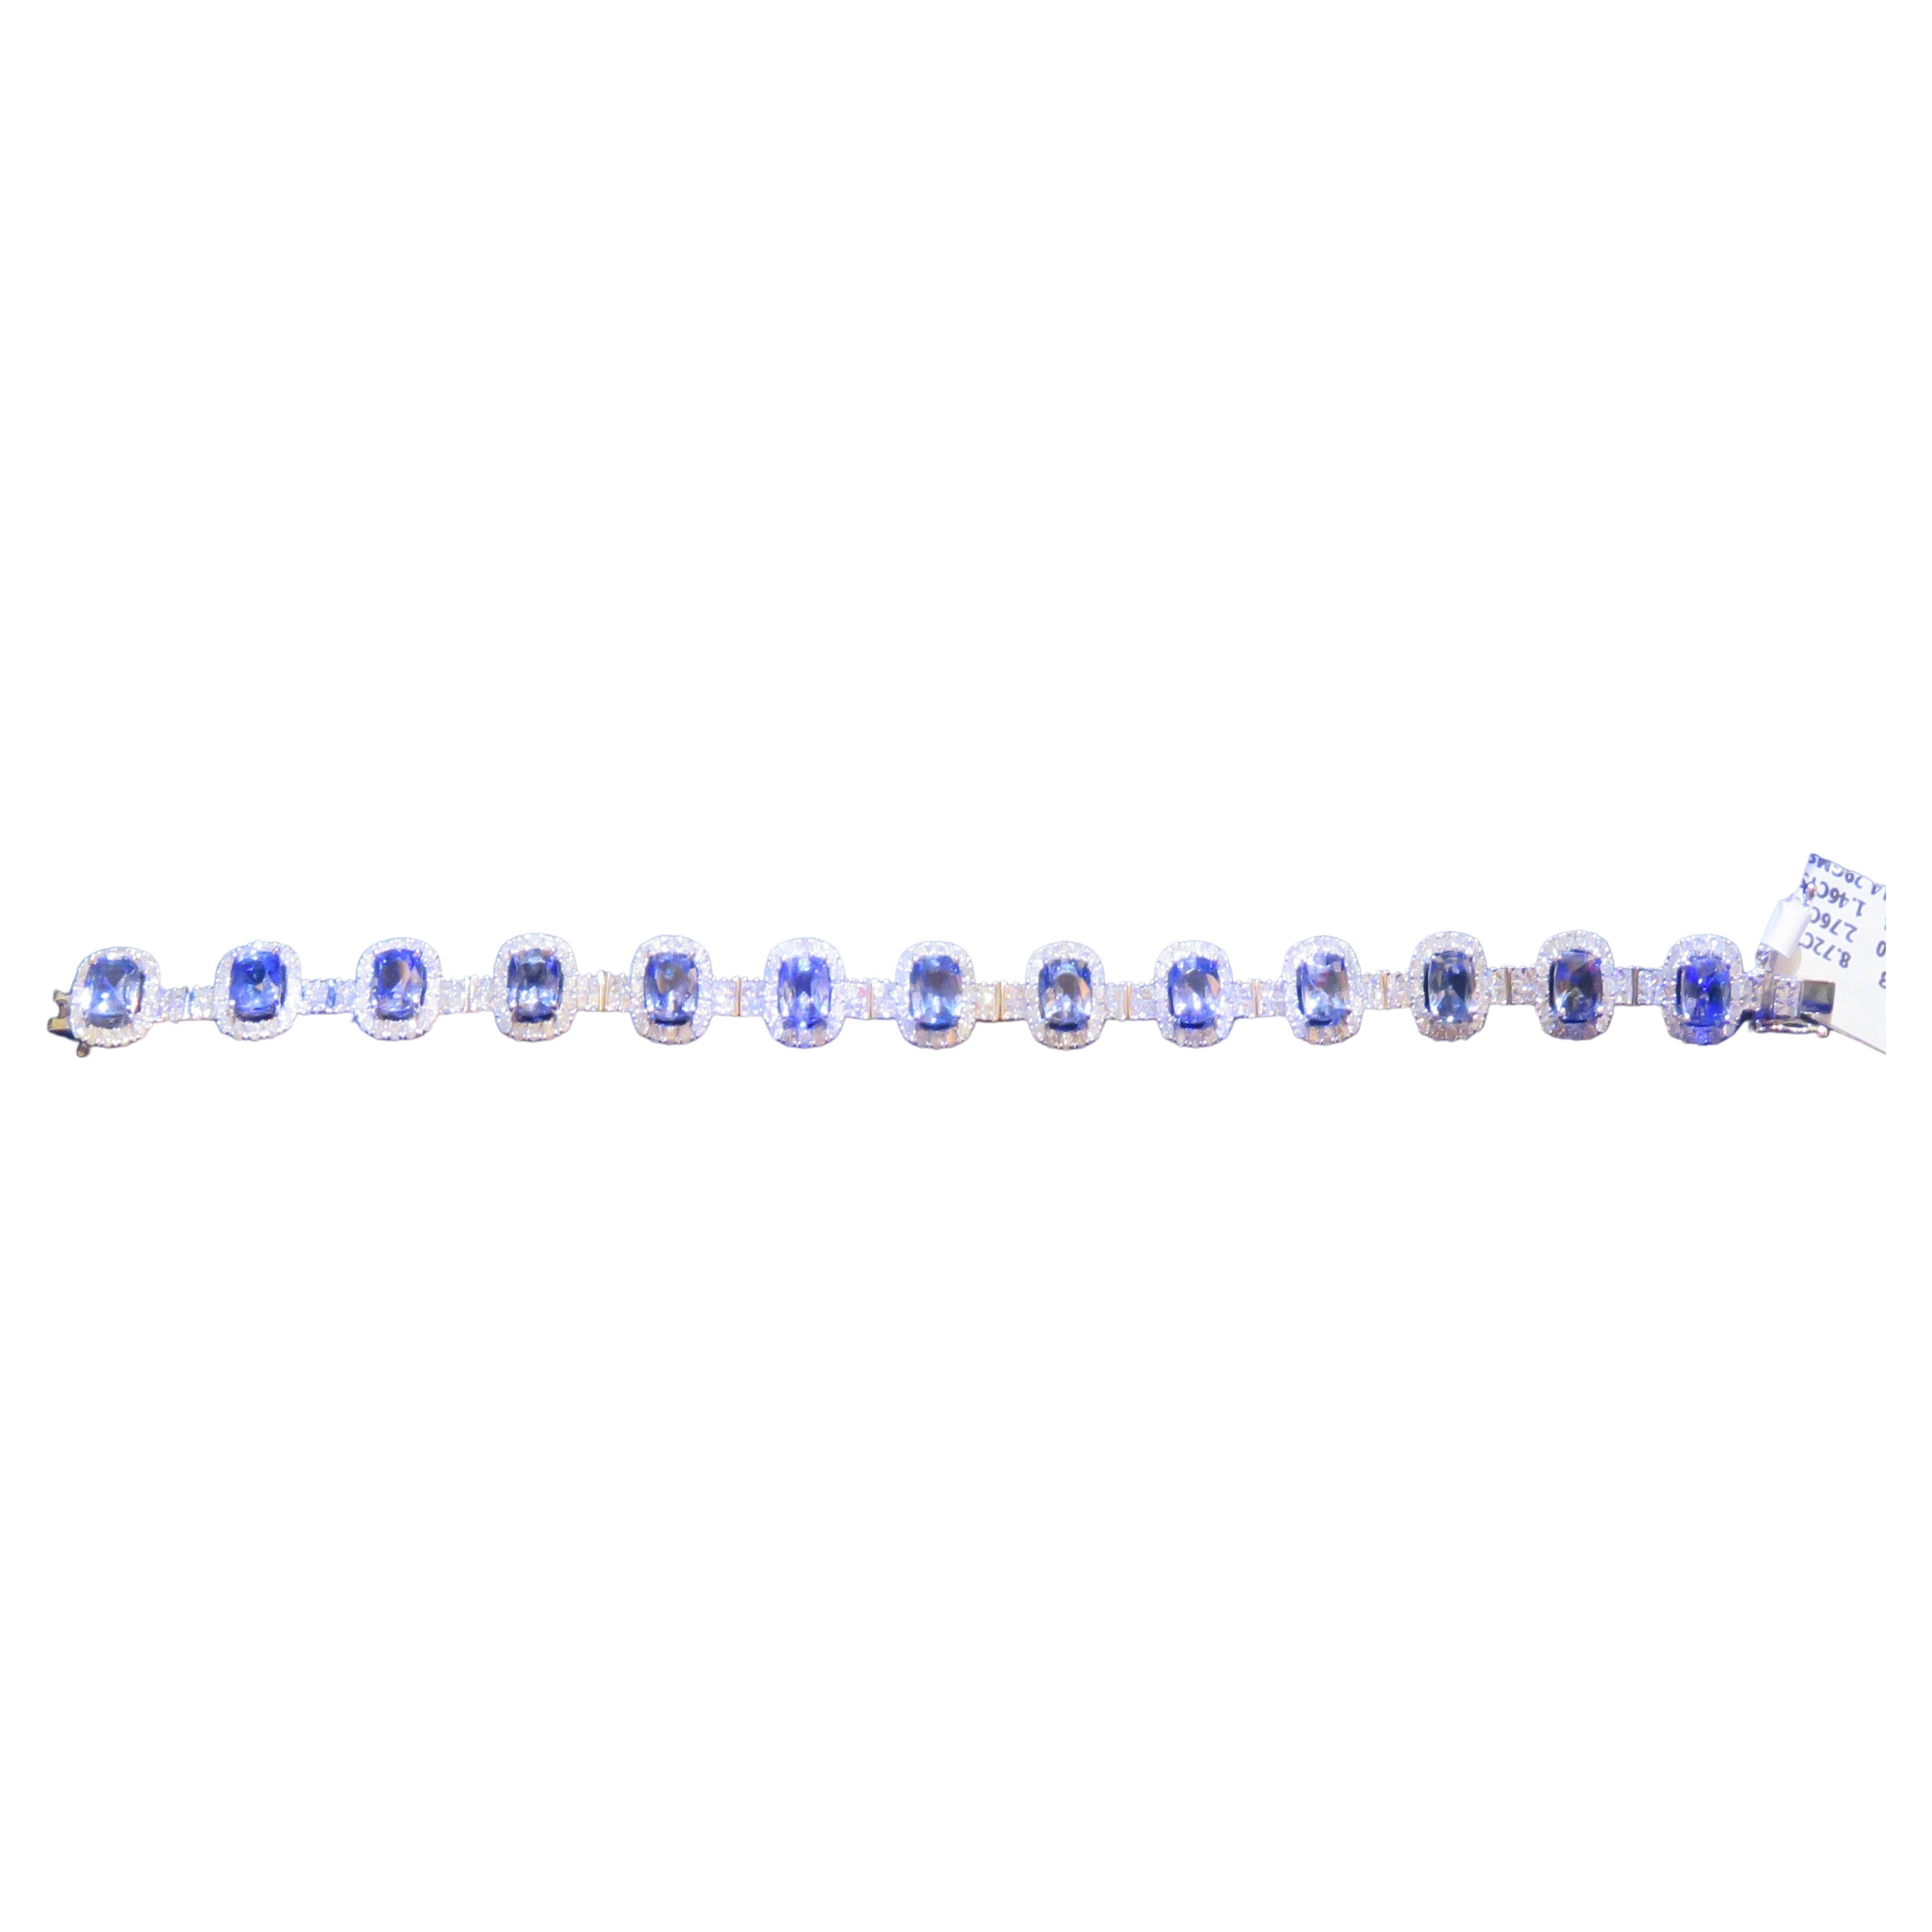 Nwt $26, 900 18KT Gold Magnificent Rare 13 Ct Blue Sapphire Diamond Bracelet For Sale